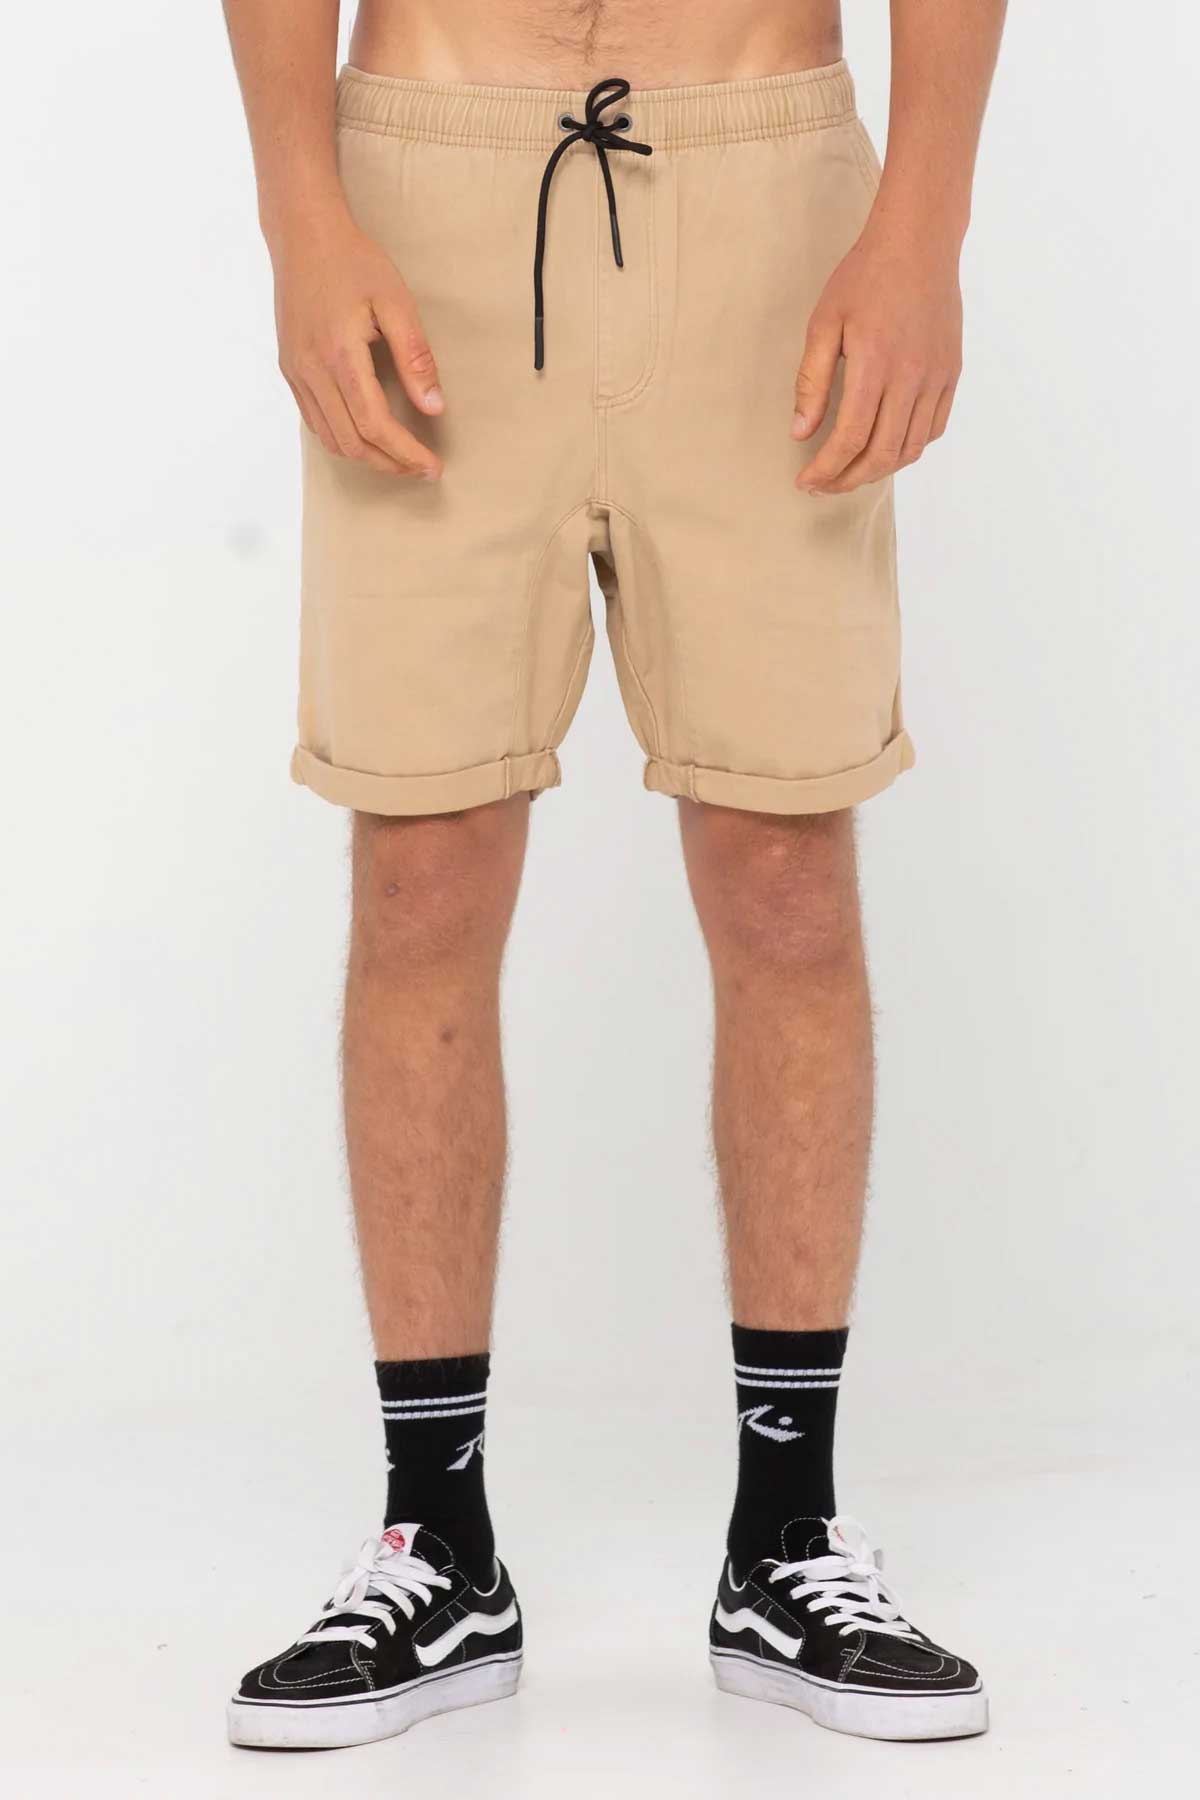 Rusty Hooked on 18 elastic shorts 